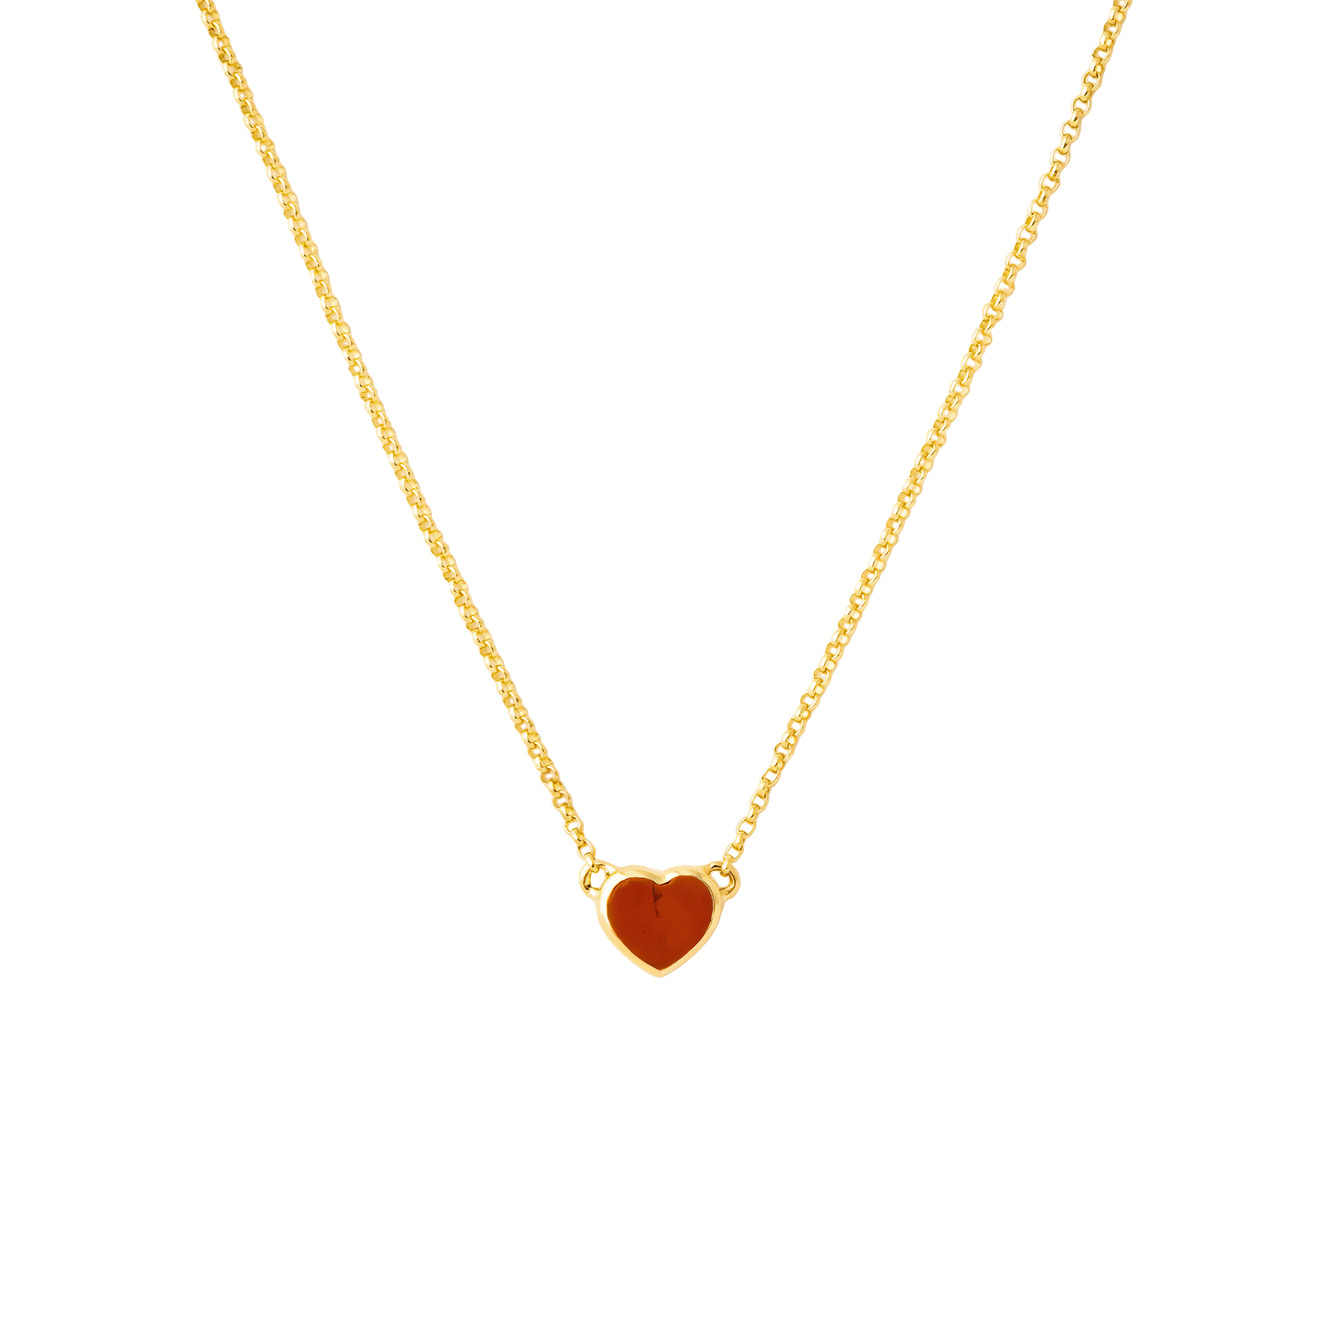 Lovelavka Подвеска Stone Heart из золота с яшмой lovelavka кольцо из золота с сердцем из яшмы stone heart